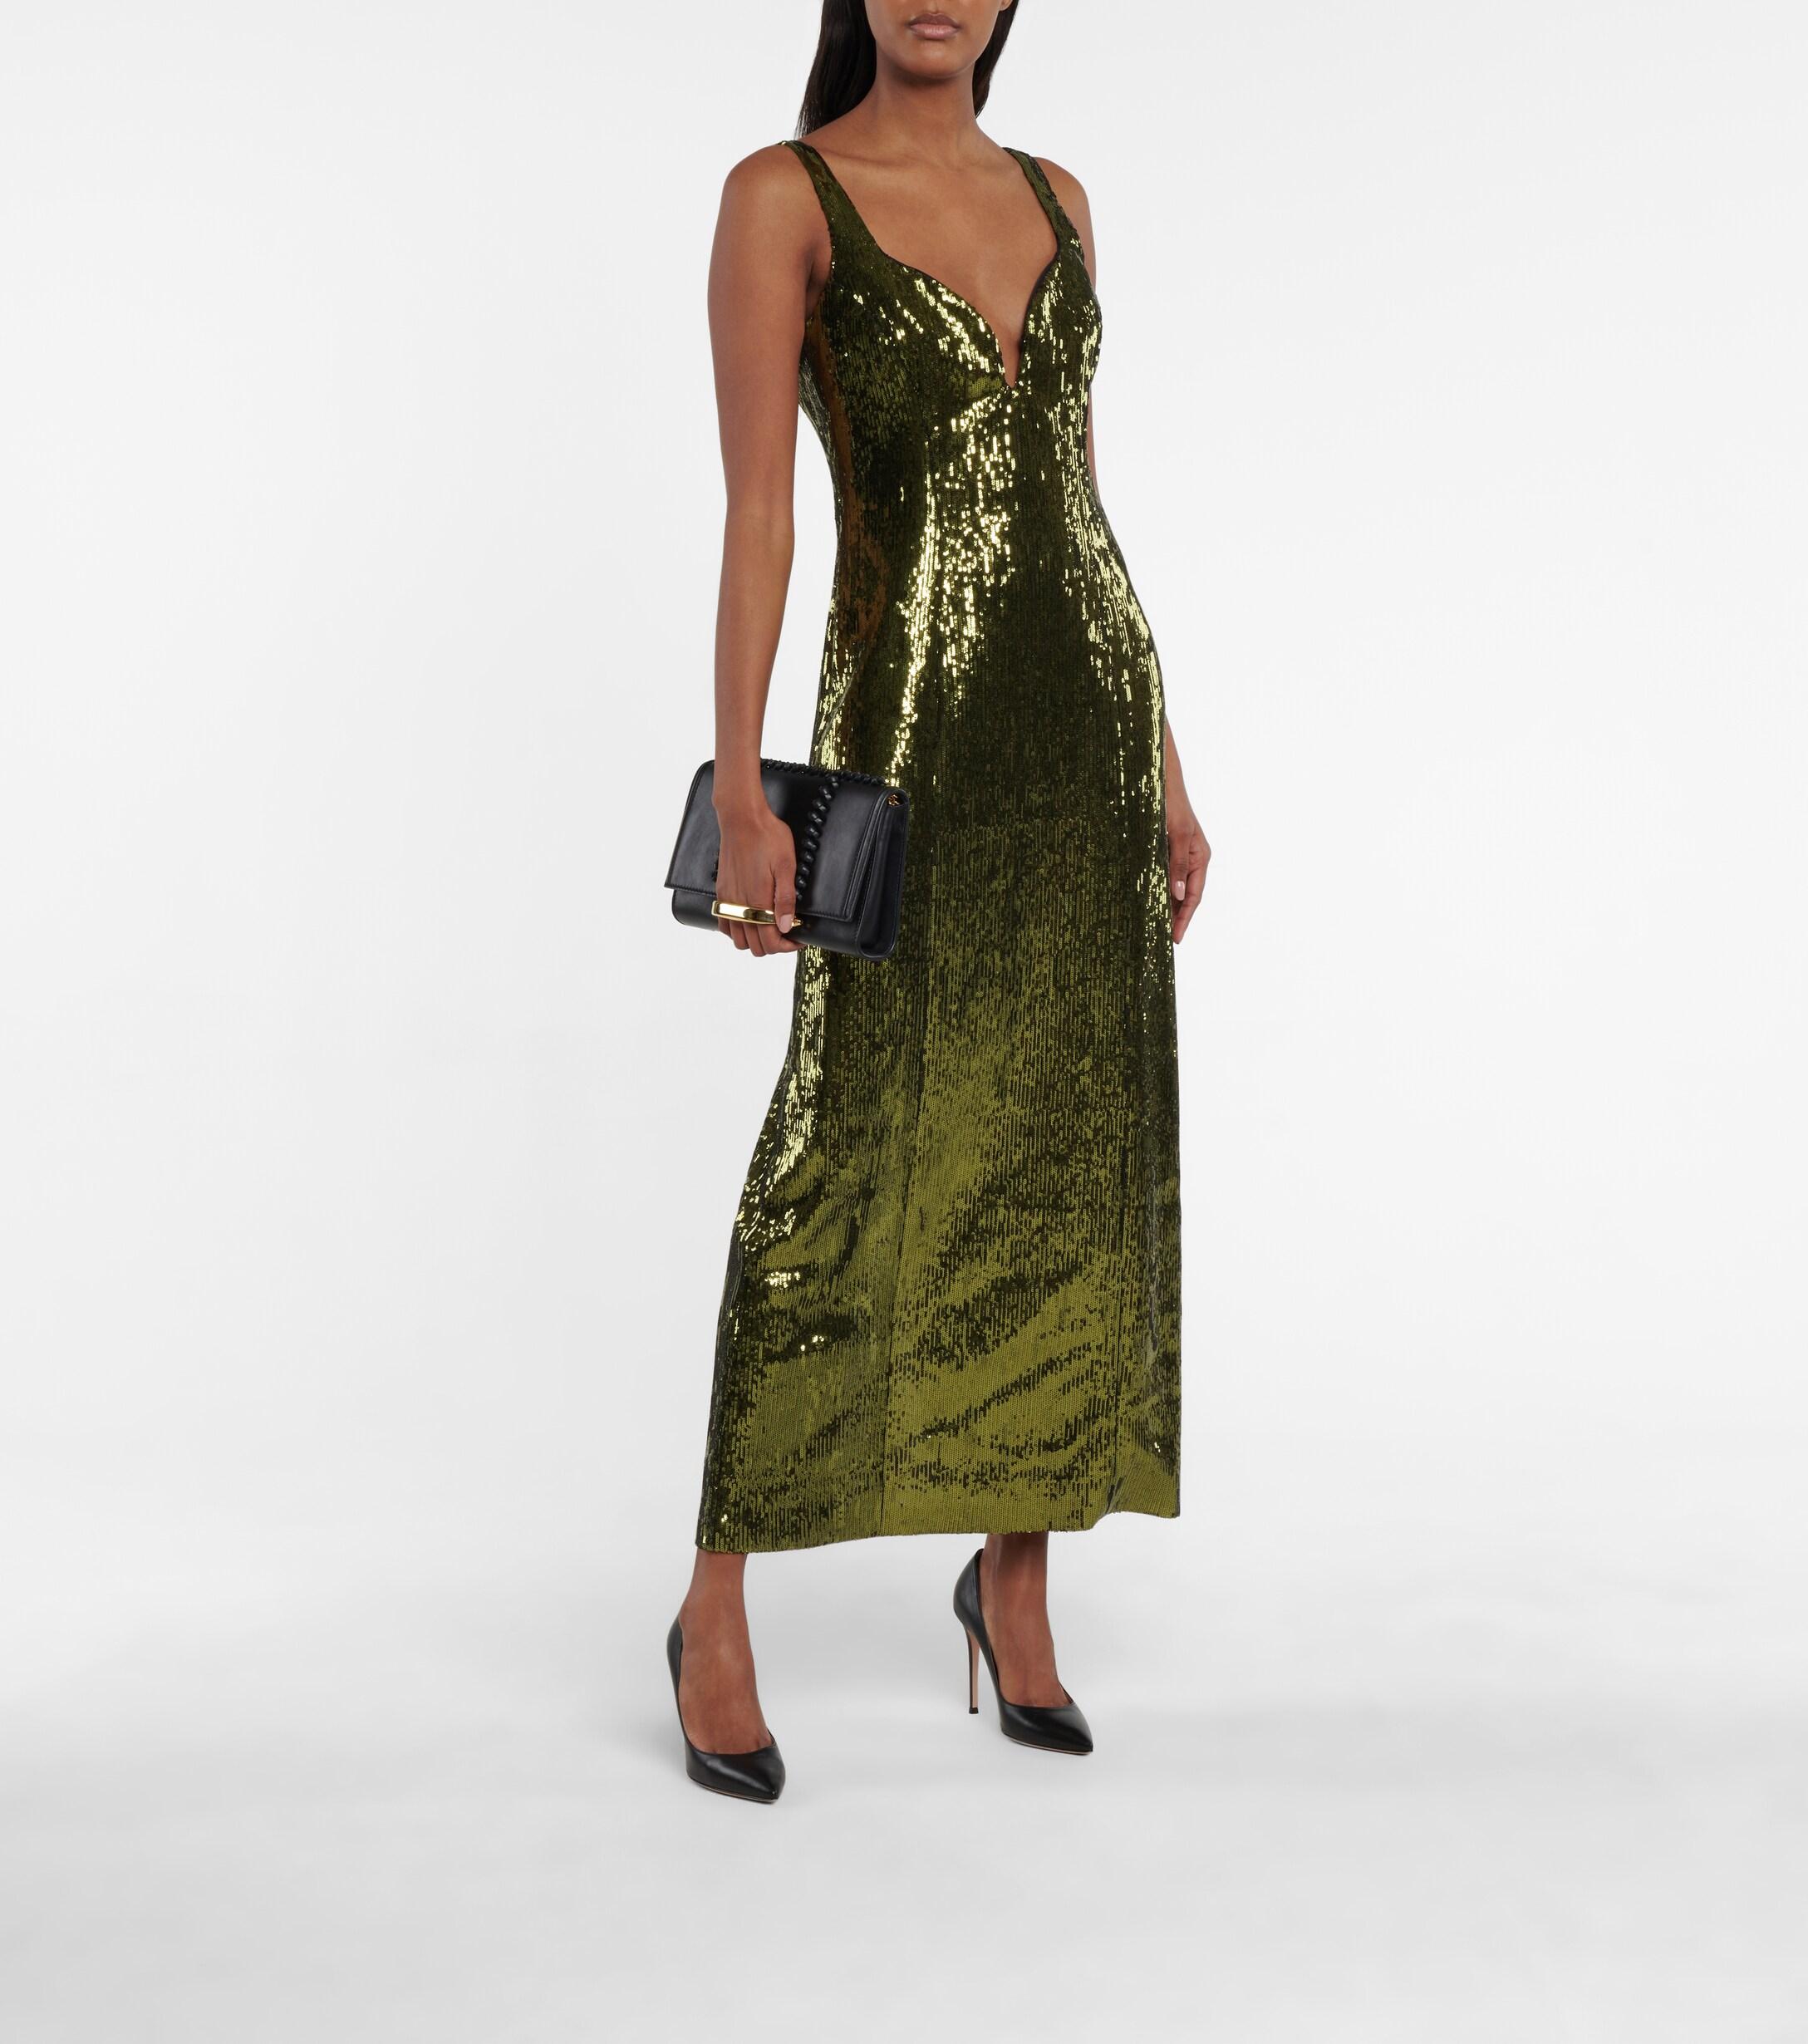 Galvan London Savannah Sequined Midi Dress in Green - Lyst